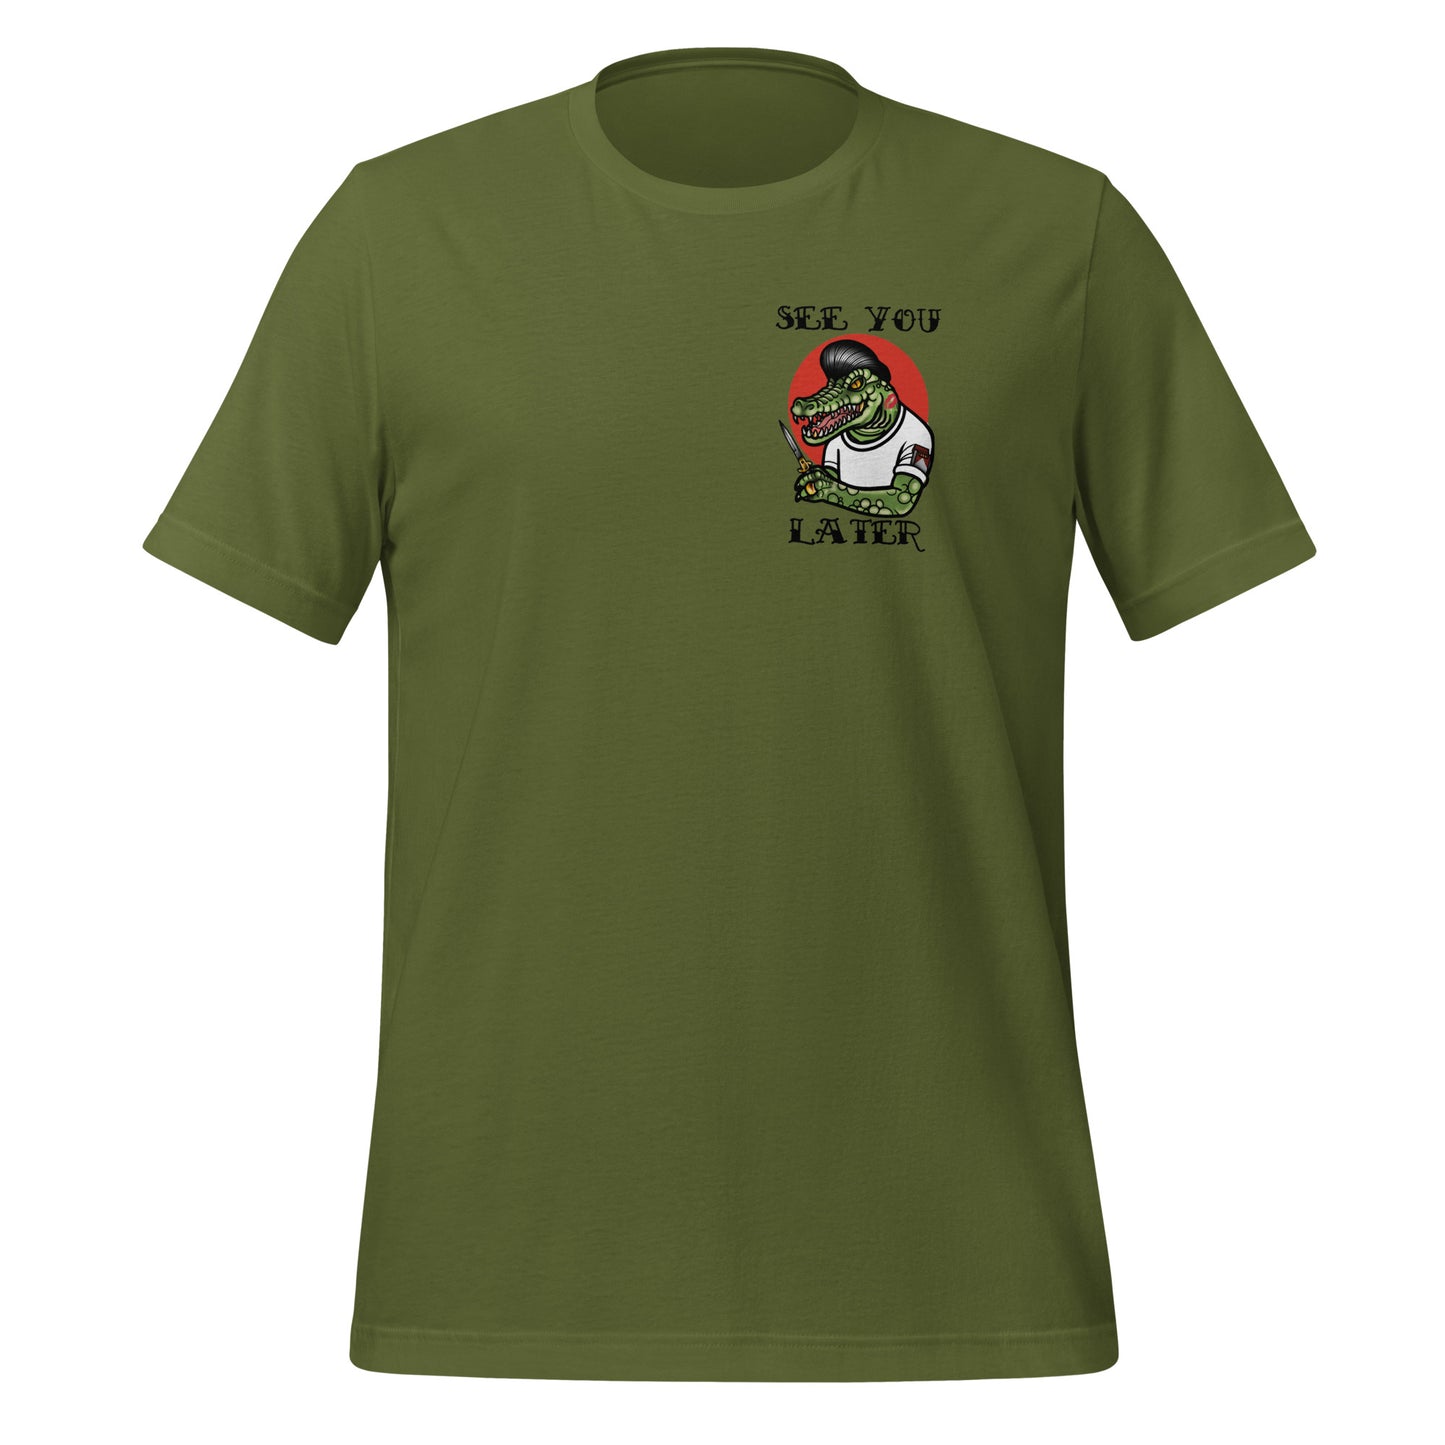 Later Gator Unisex t-shirt